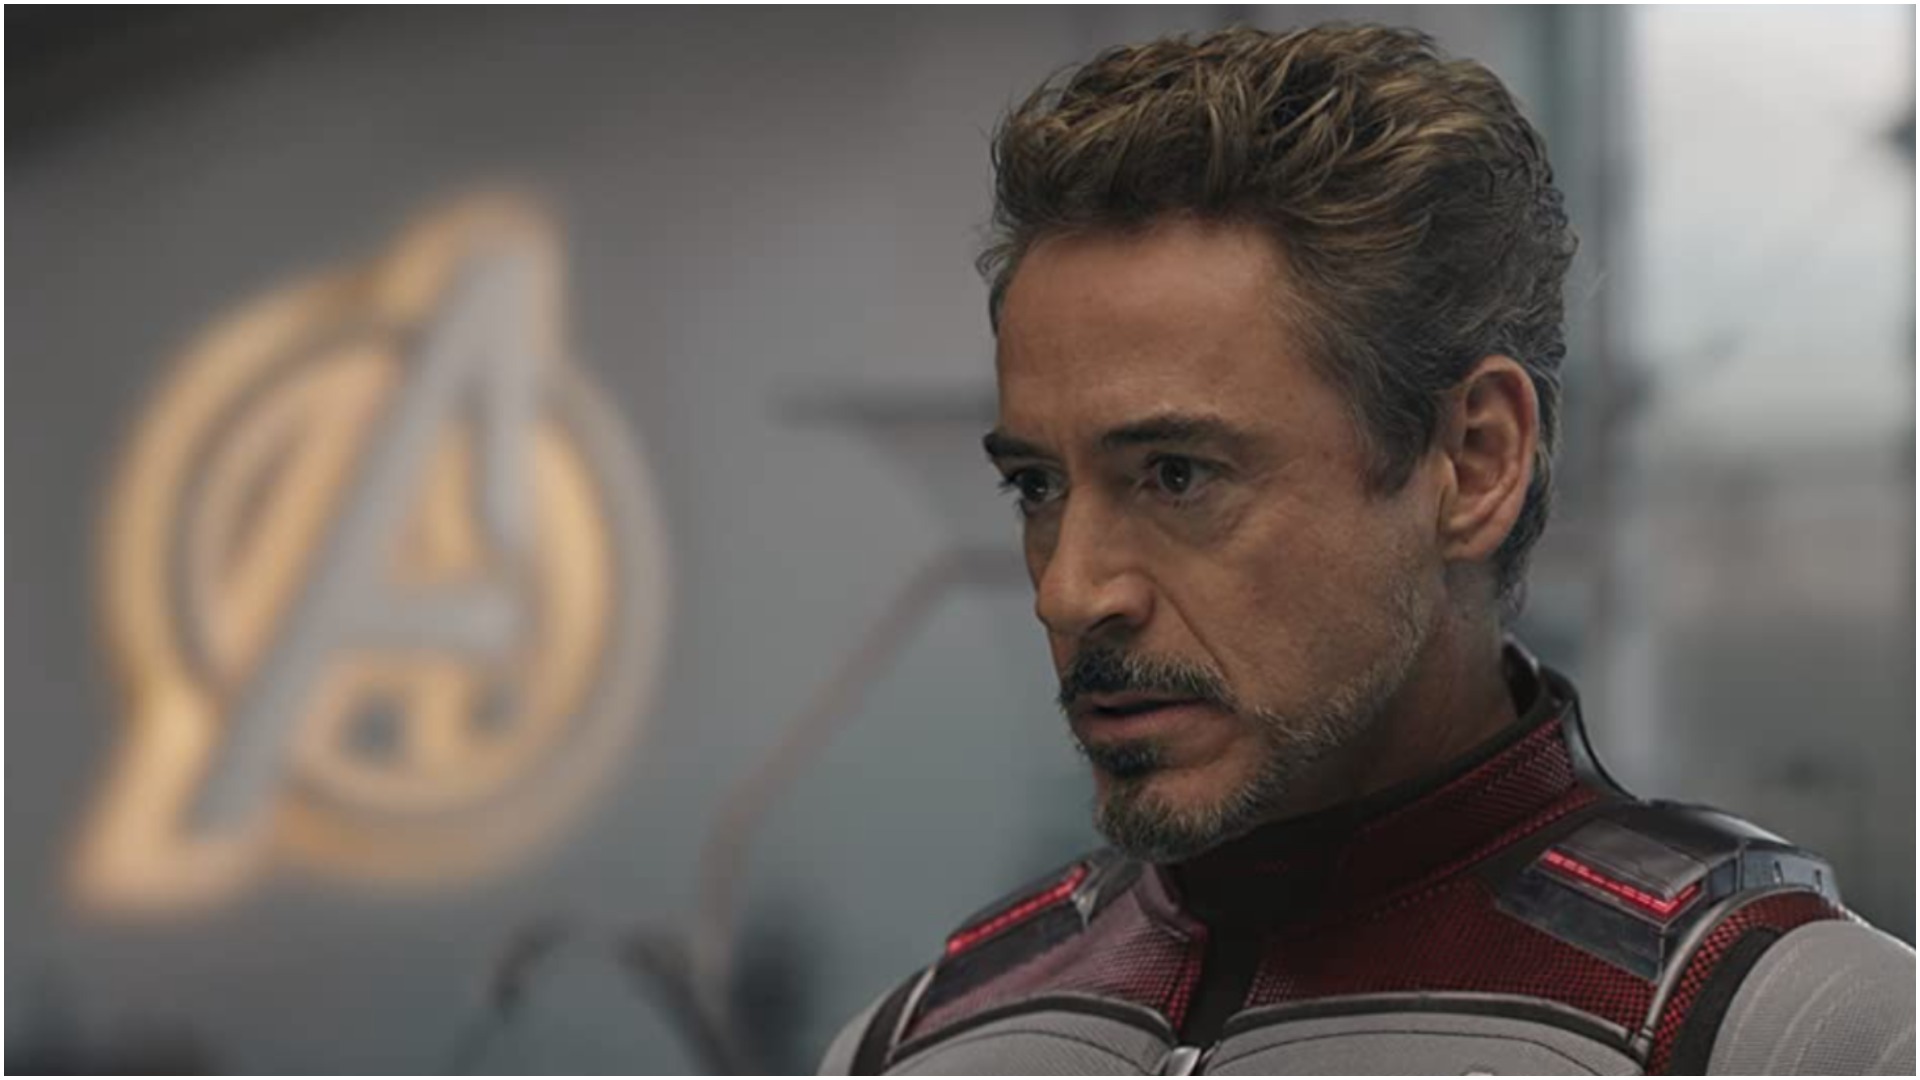 Avengers Endgame's Joe Russo Finally Breaks Silence on Why Iron Man Was  Killed Instead of Captain America - News18